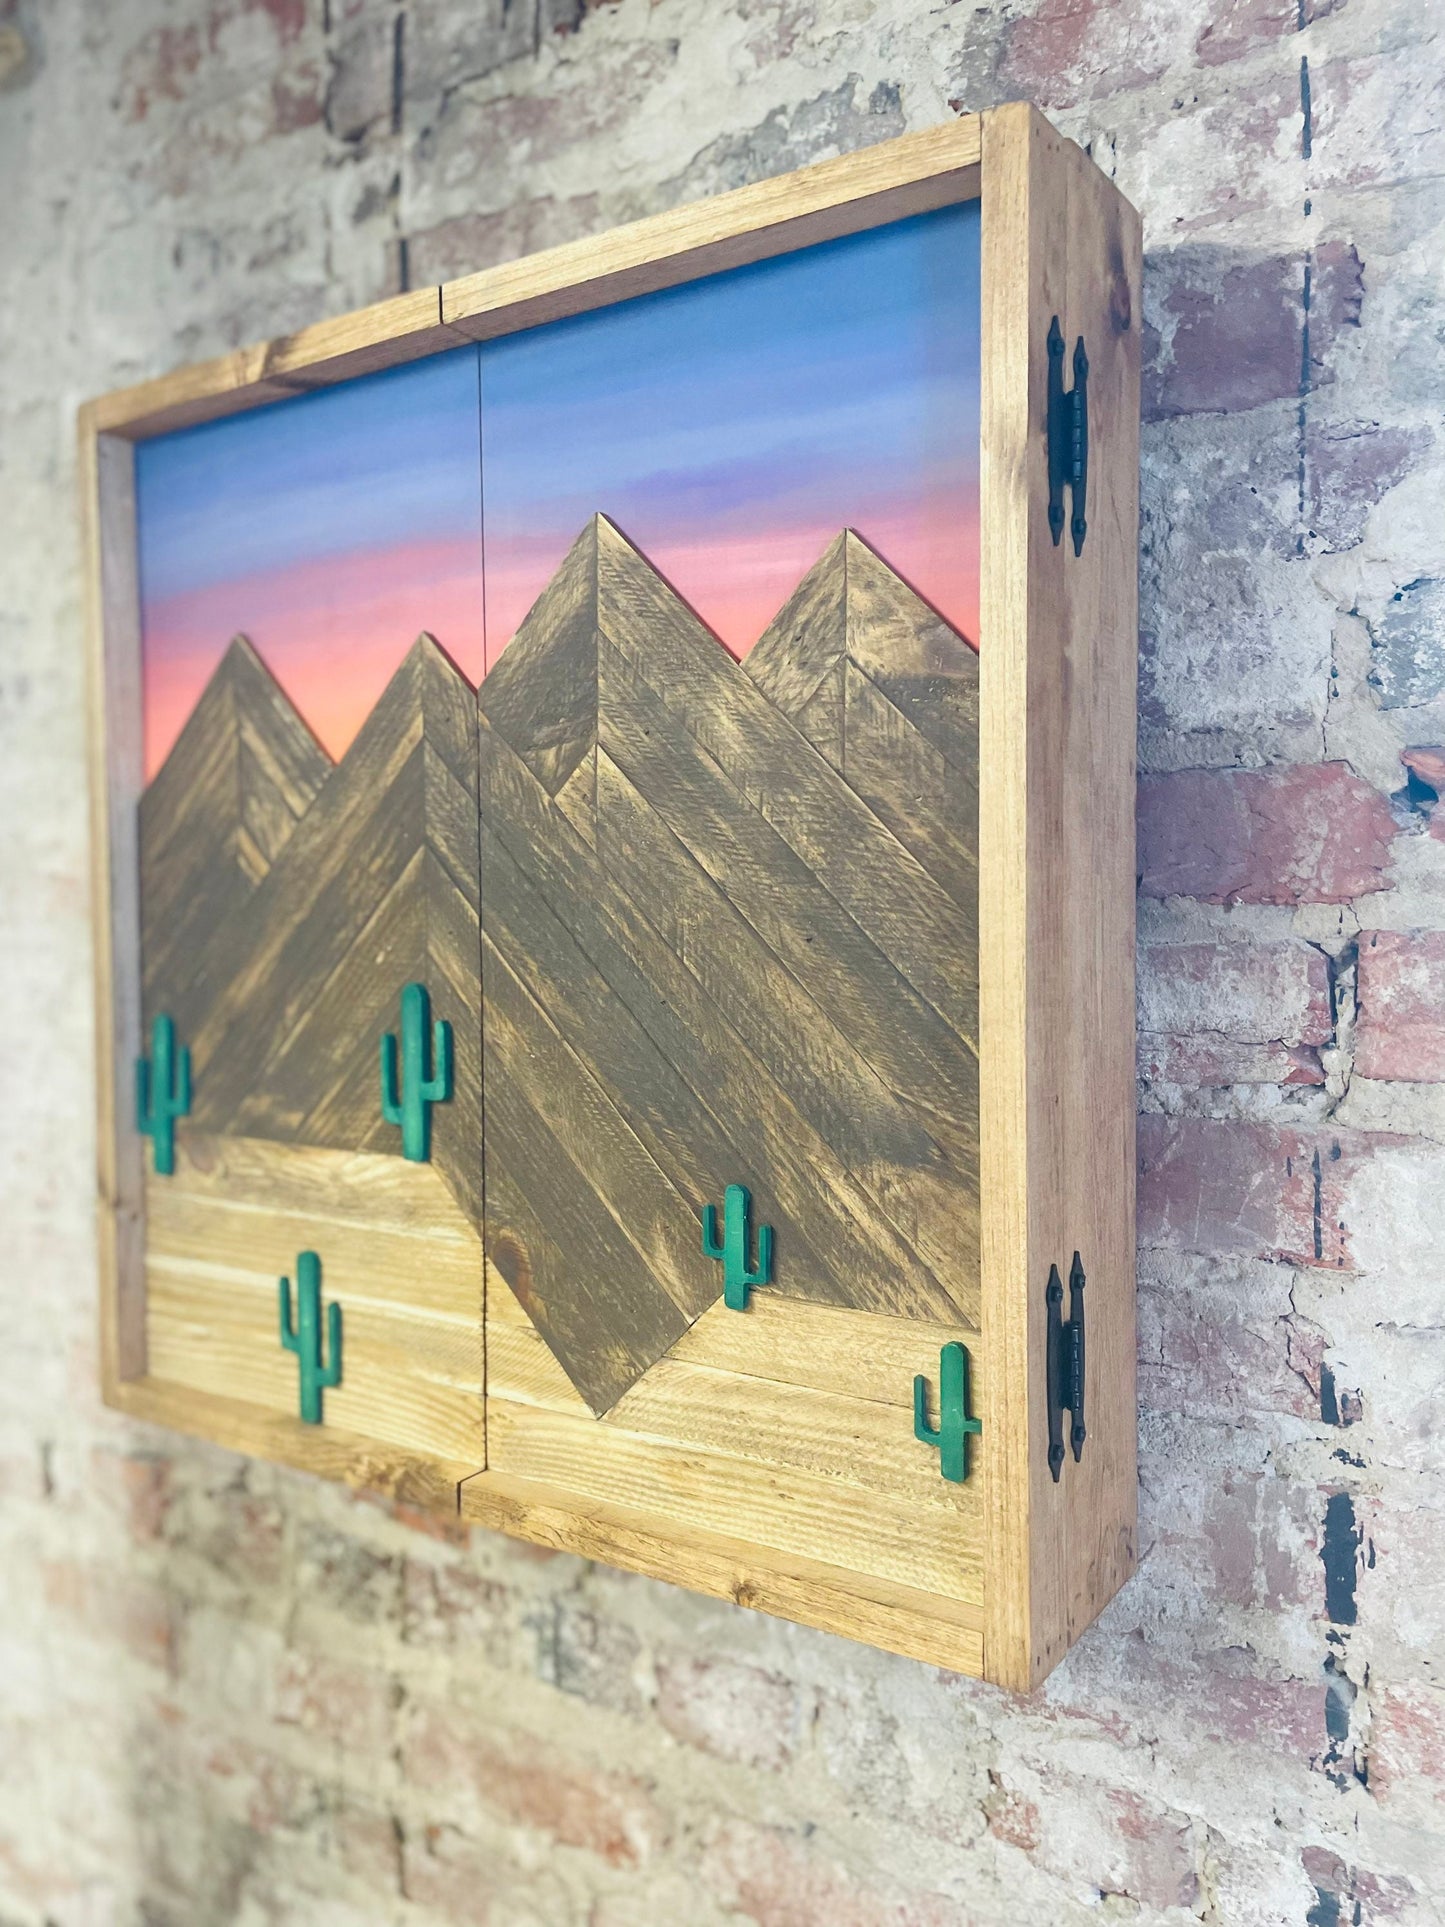 Rustic Dartboard Cabinet- Painted Desert Mountain Design- Arizona Artwork- 24”x24” - Rustic Cabinet - Game Room / Man Cave Art - Wall Decor